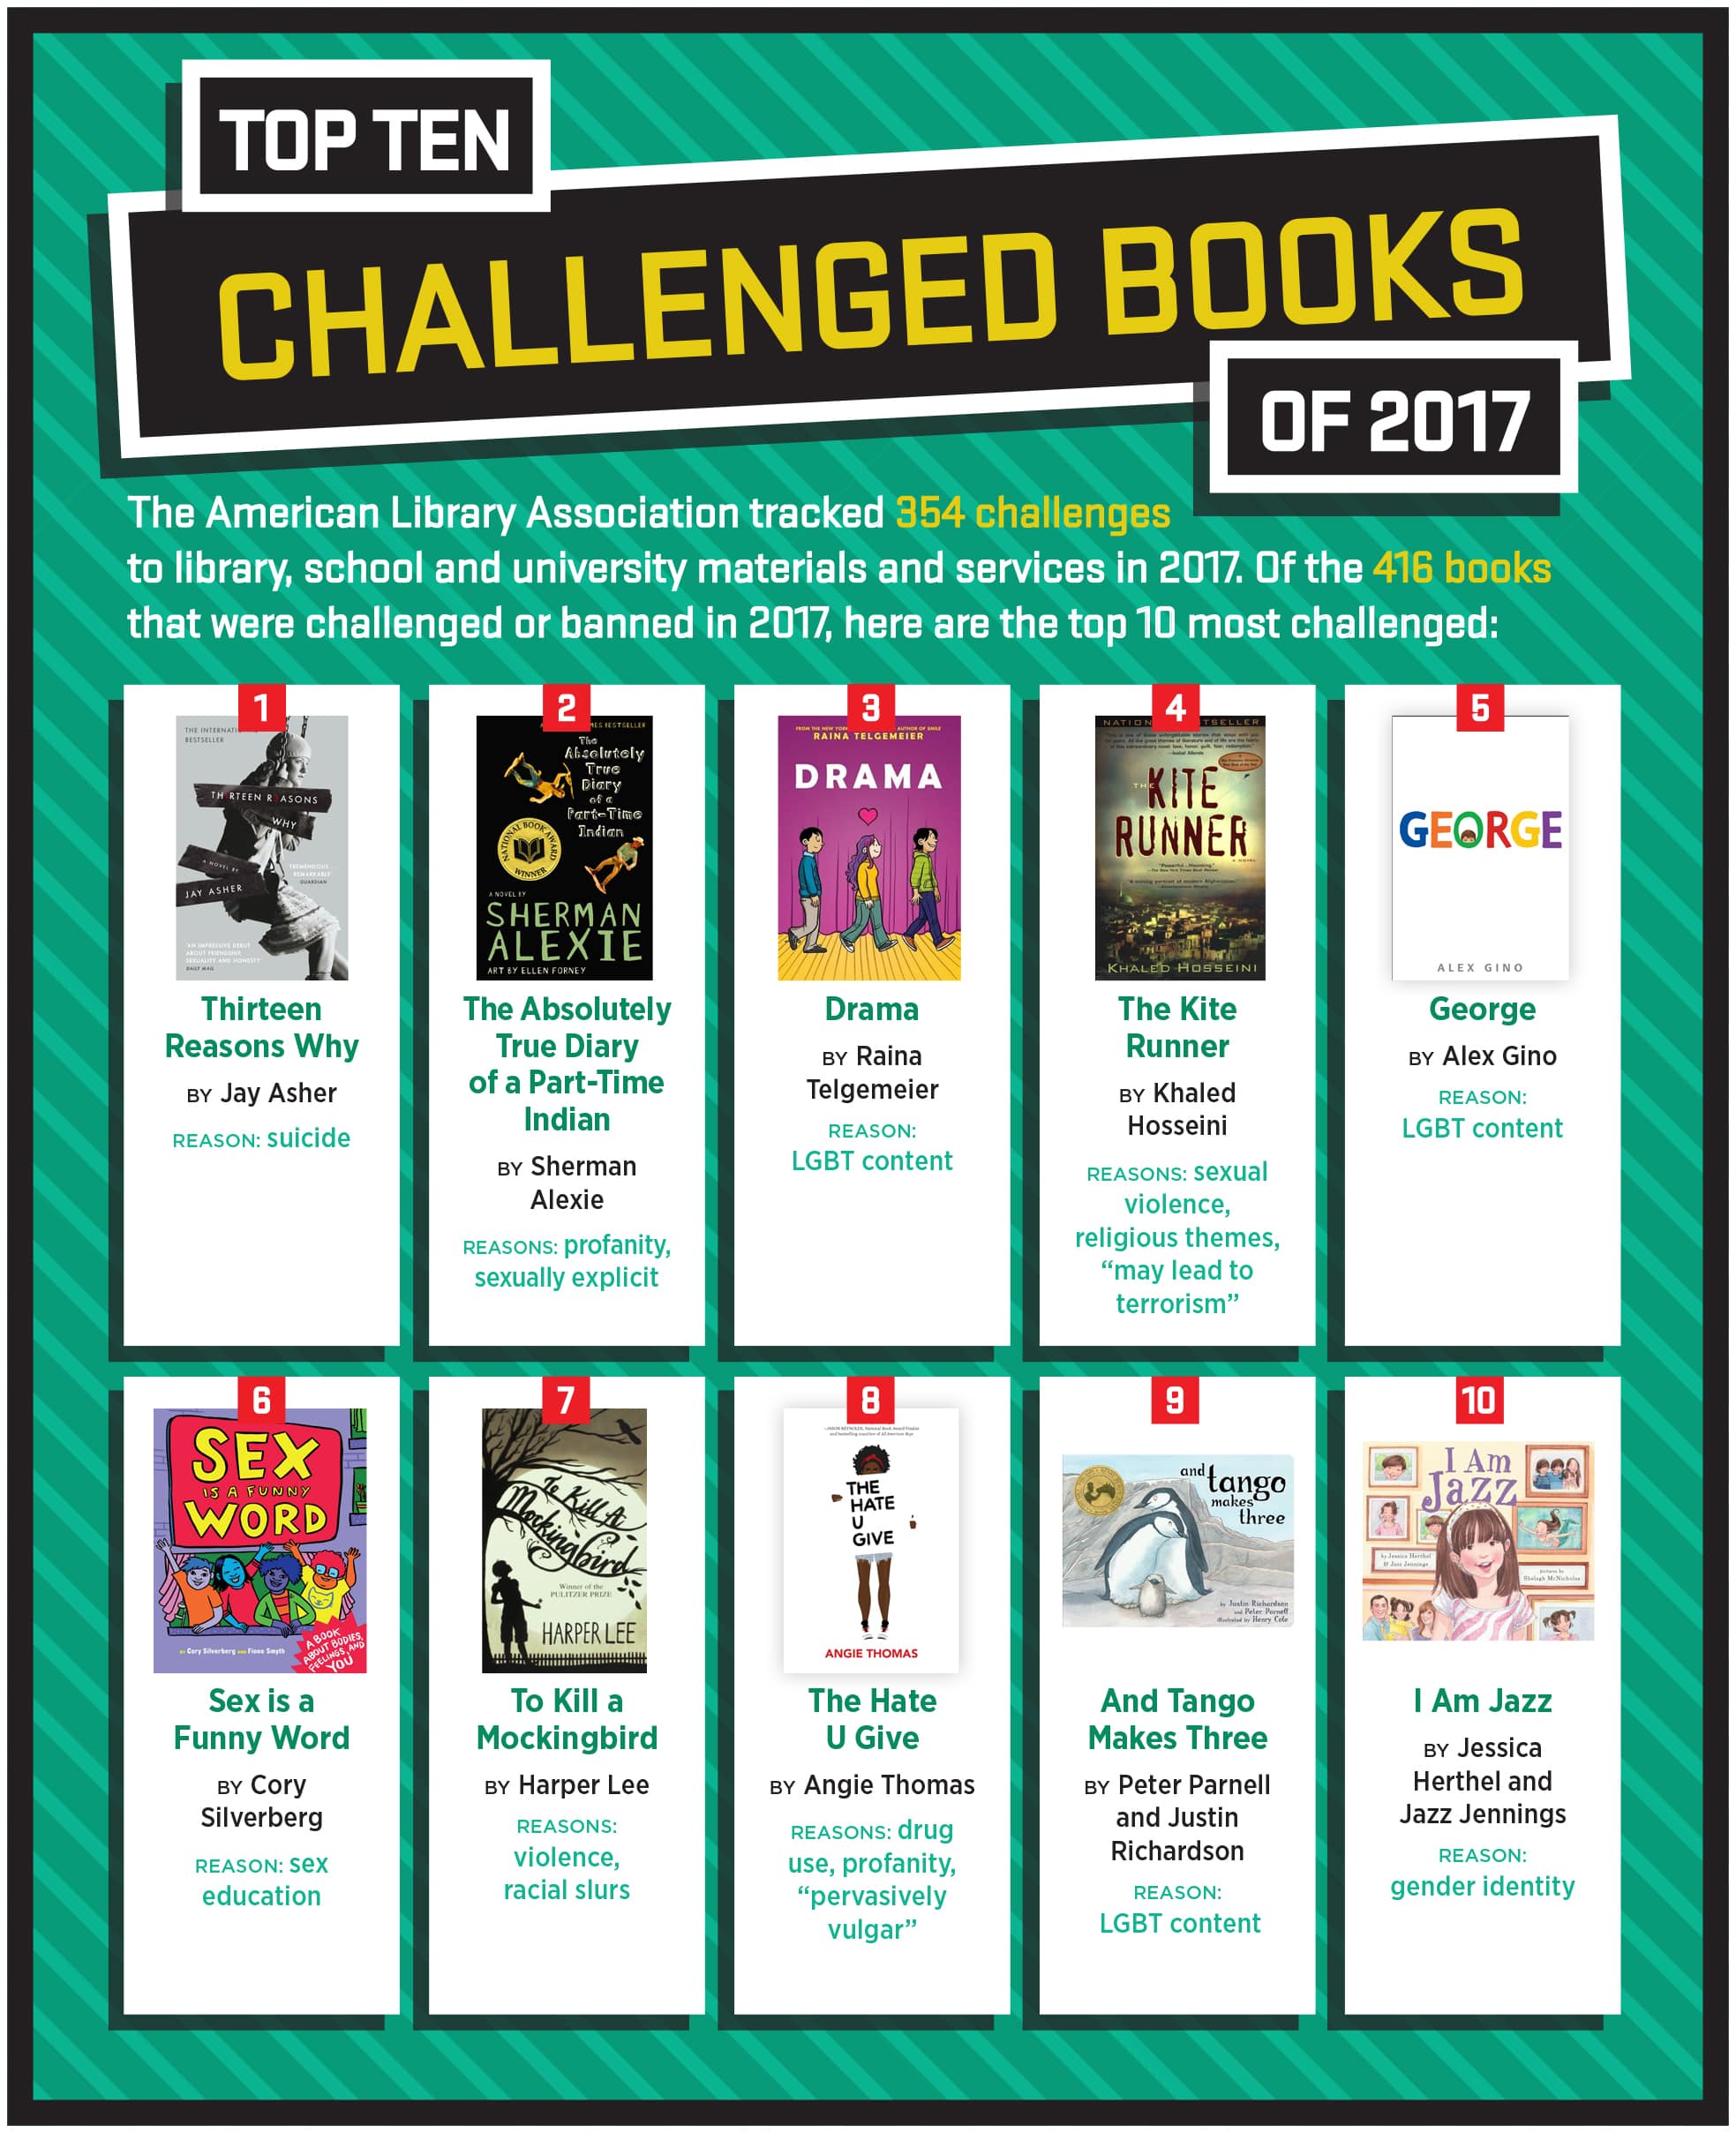 Top ten challenged books of 2017